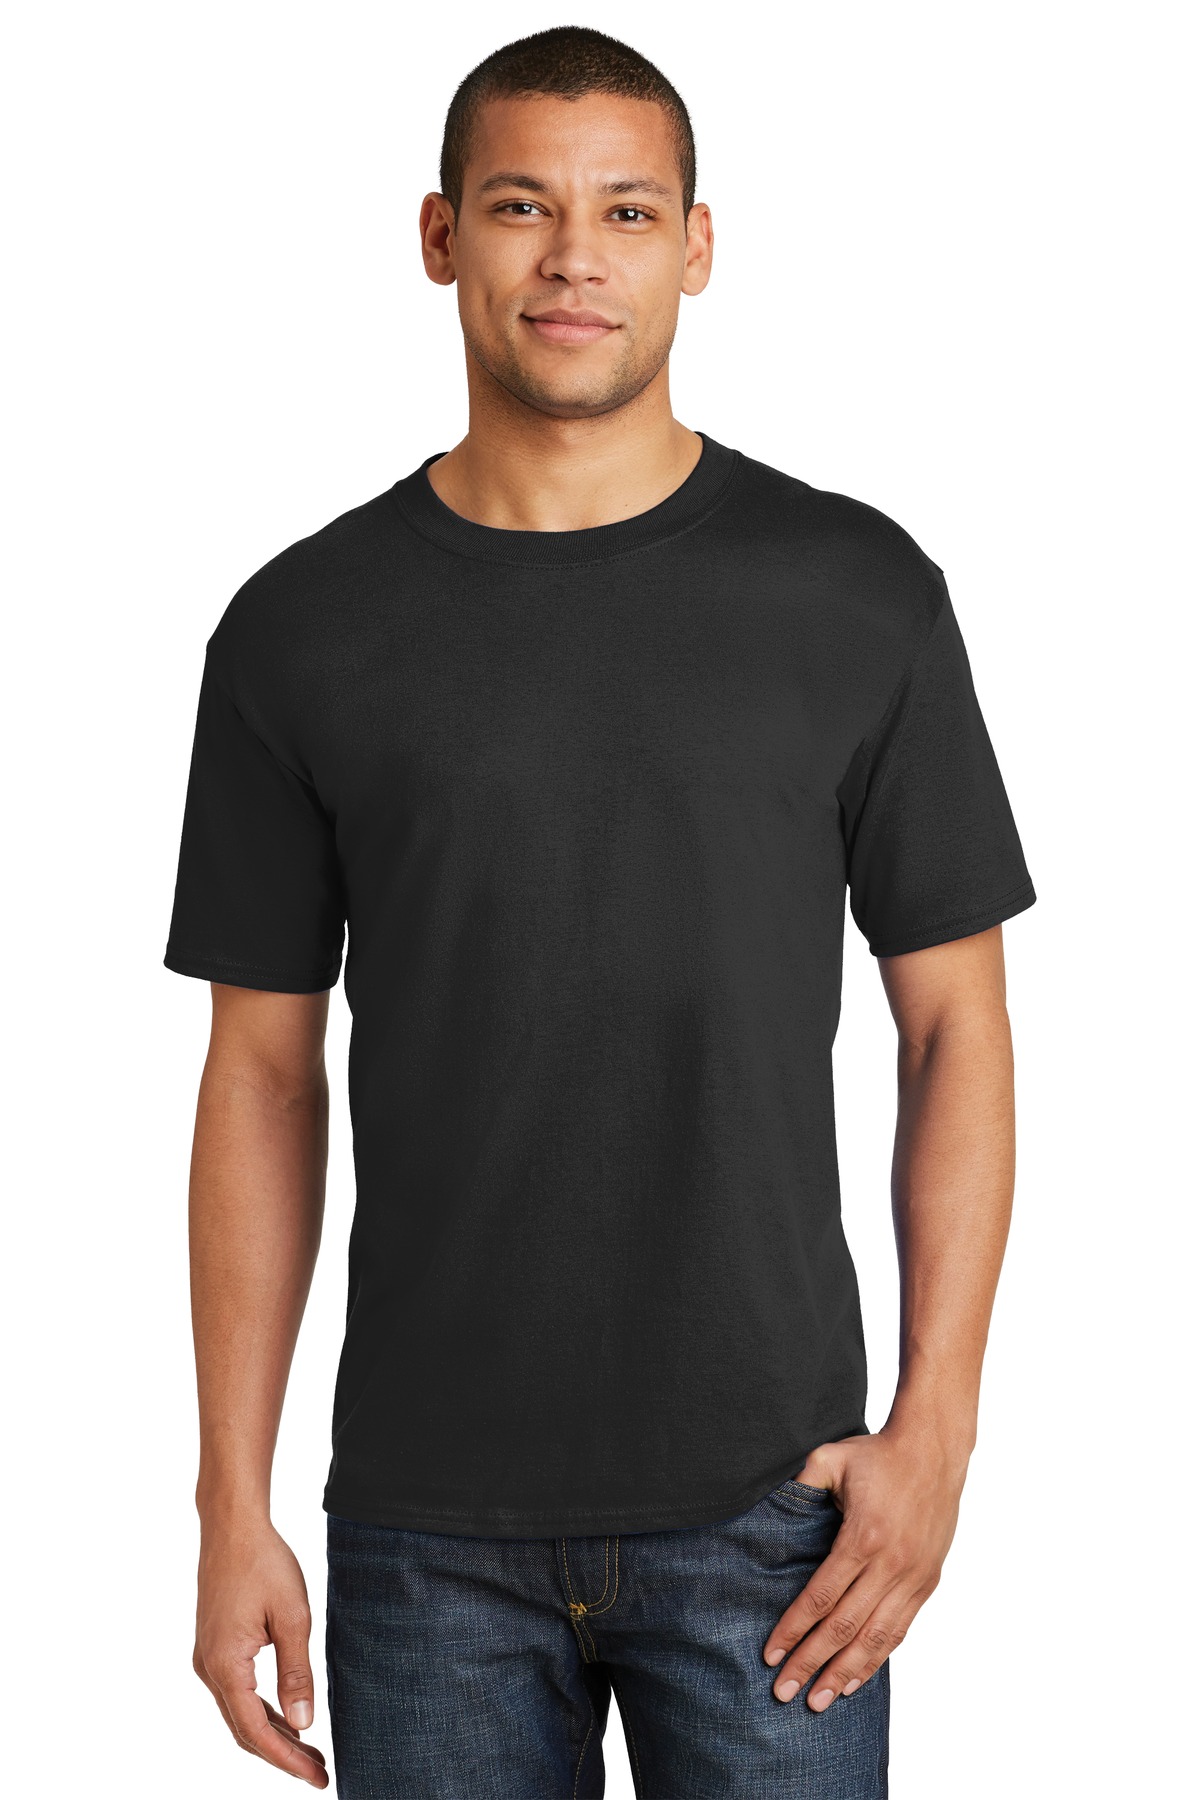 Hanes Beefy-T 100% Cotton T-Shirt - Walmart.com